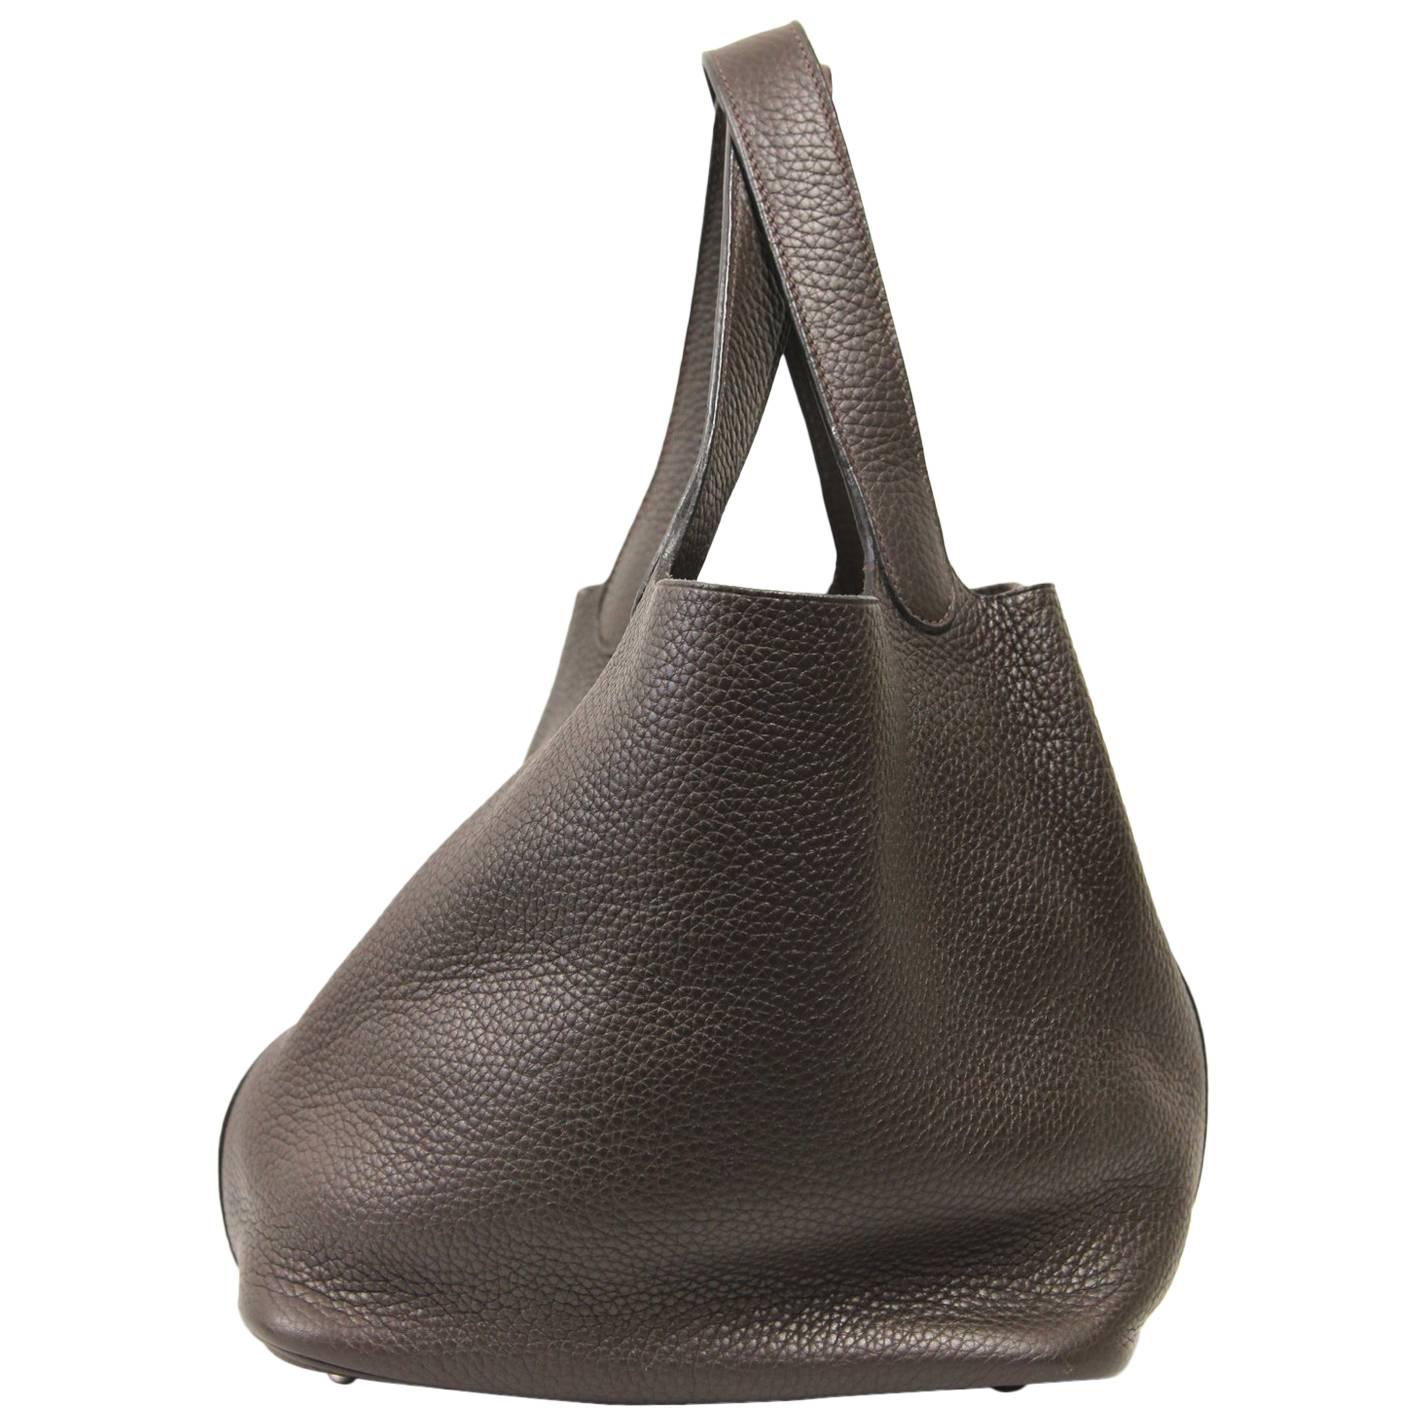 2006 Picotin Hermès Dark Brown Leather Bag